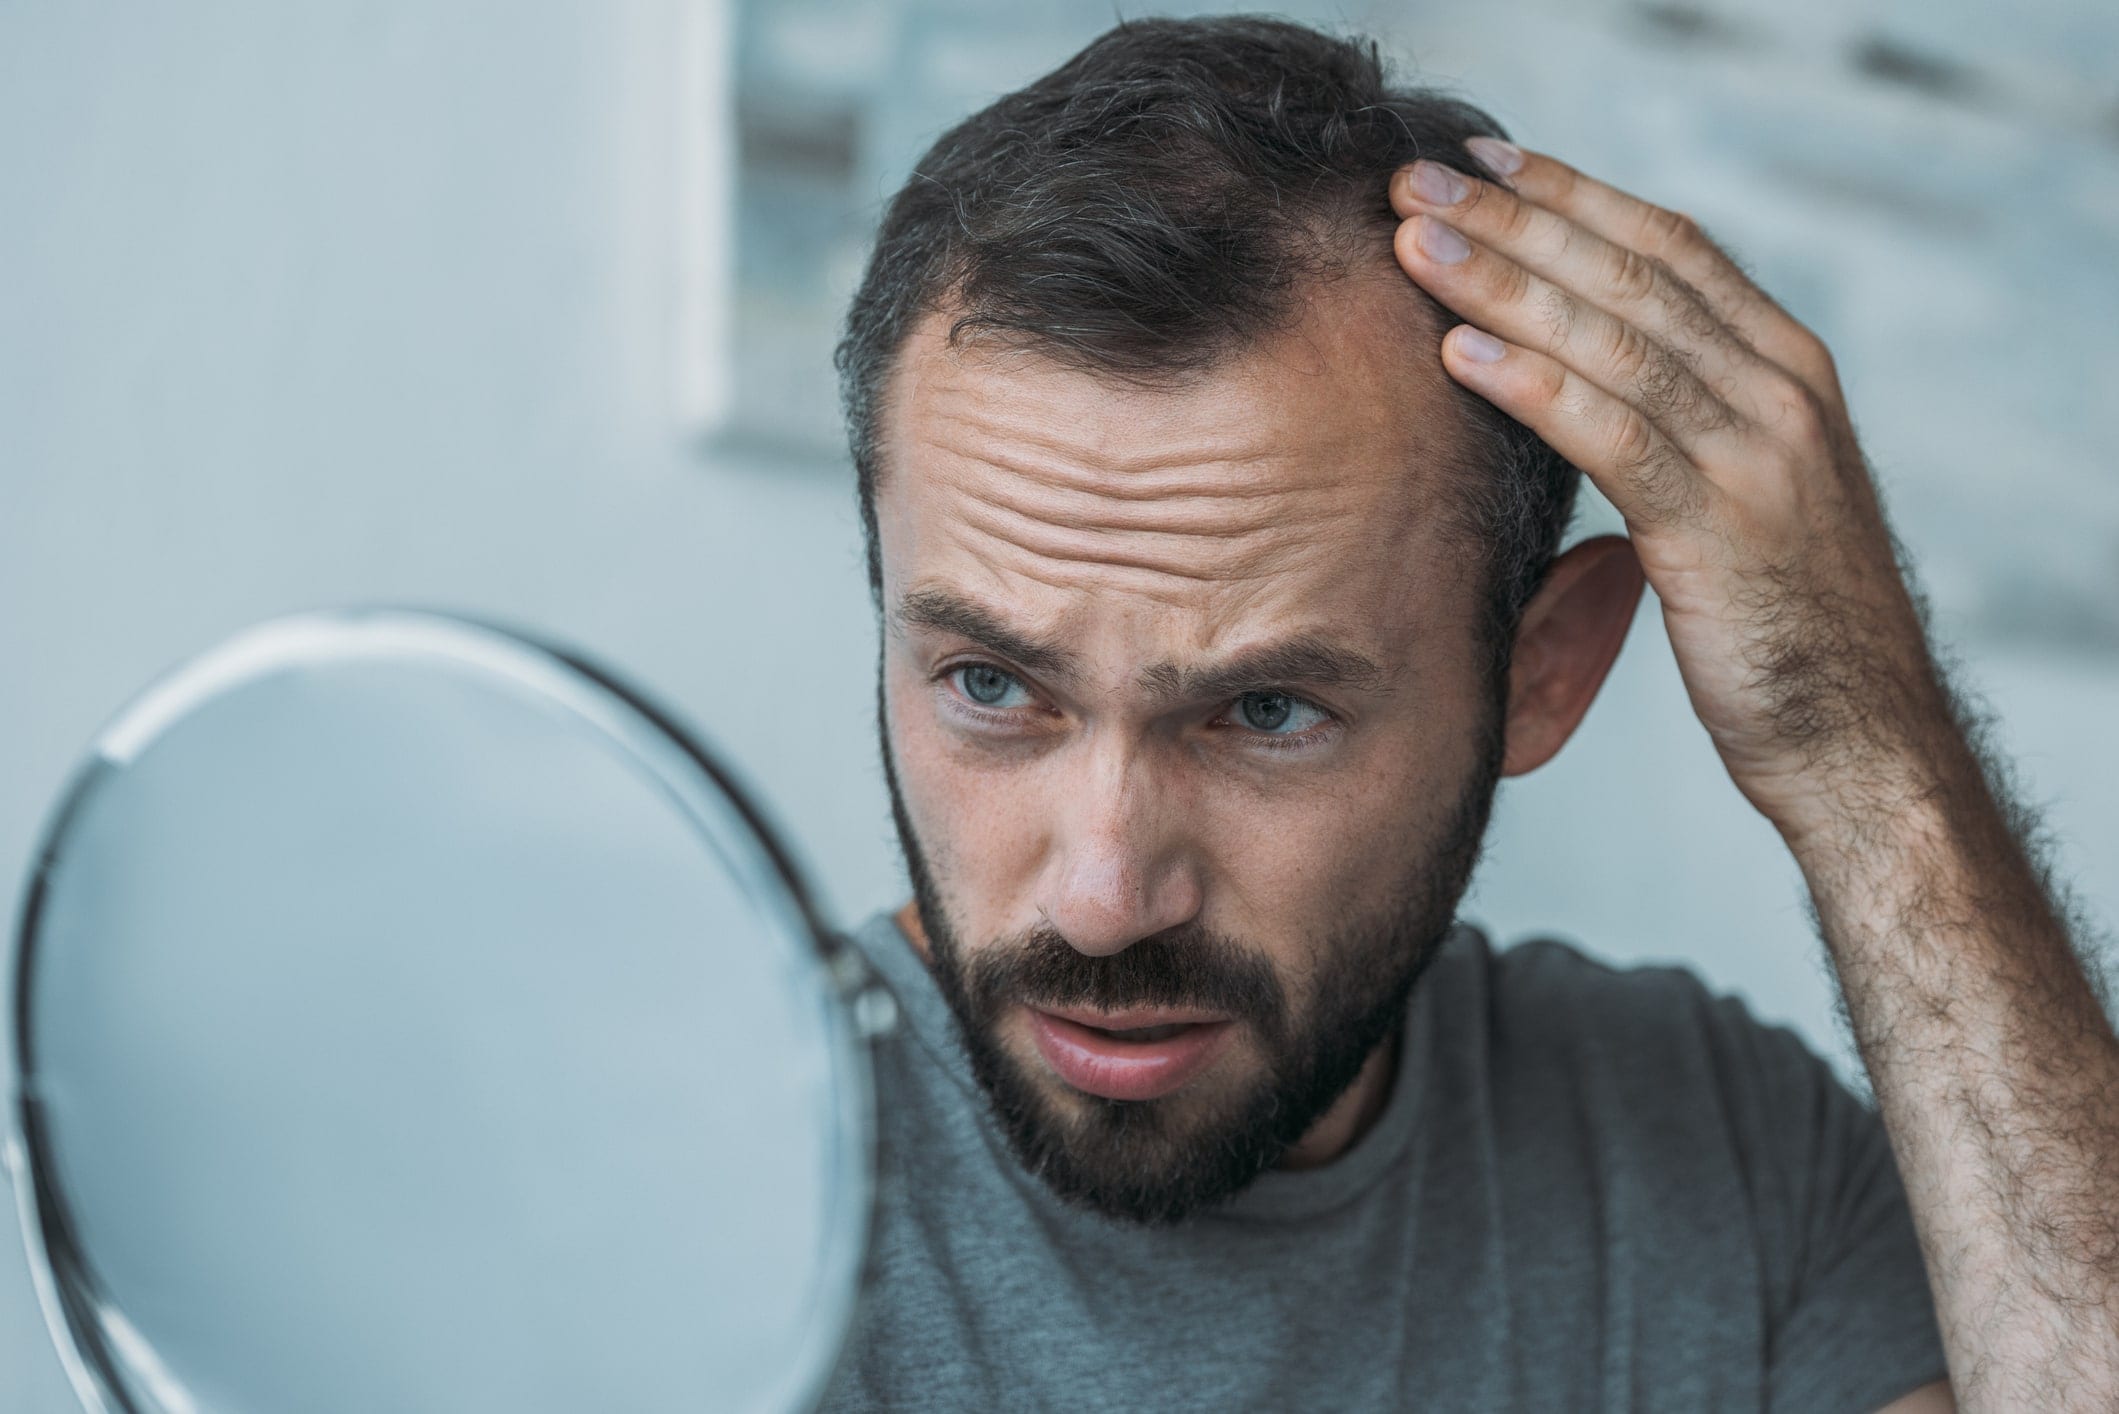 Man looking in mirror checking hair loss